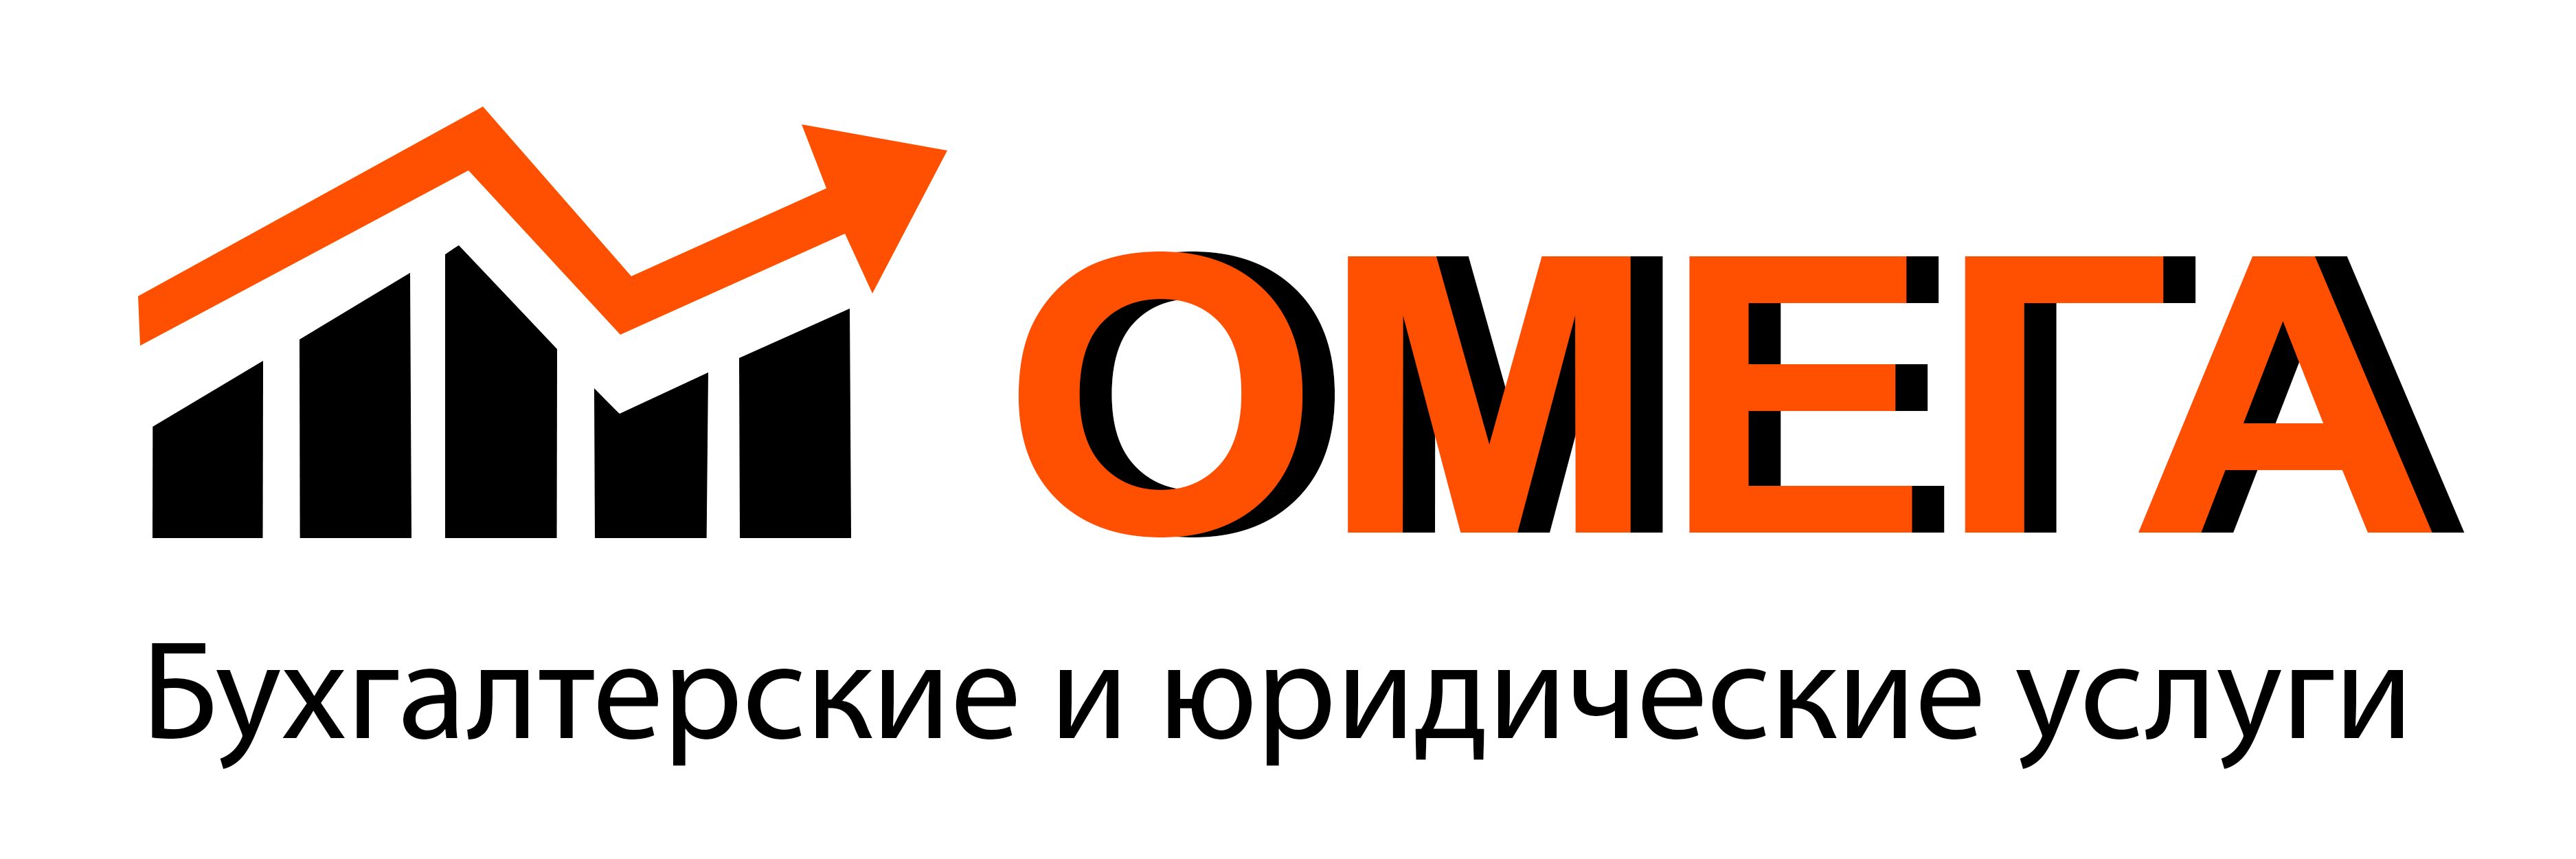 omega logo big